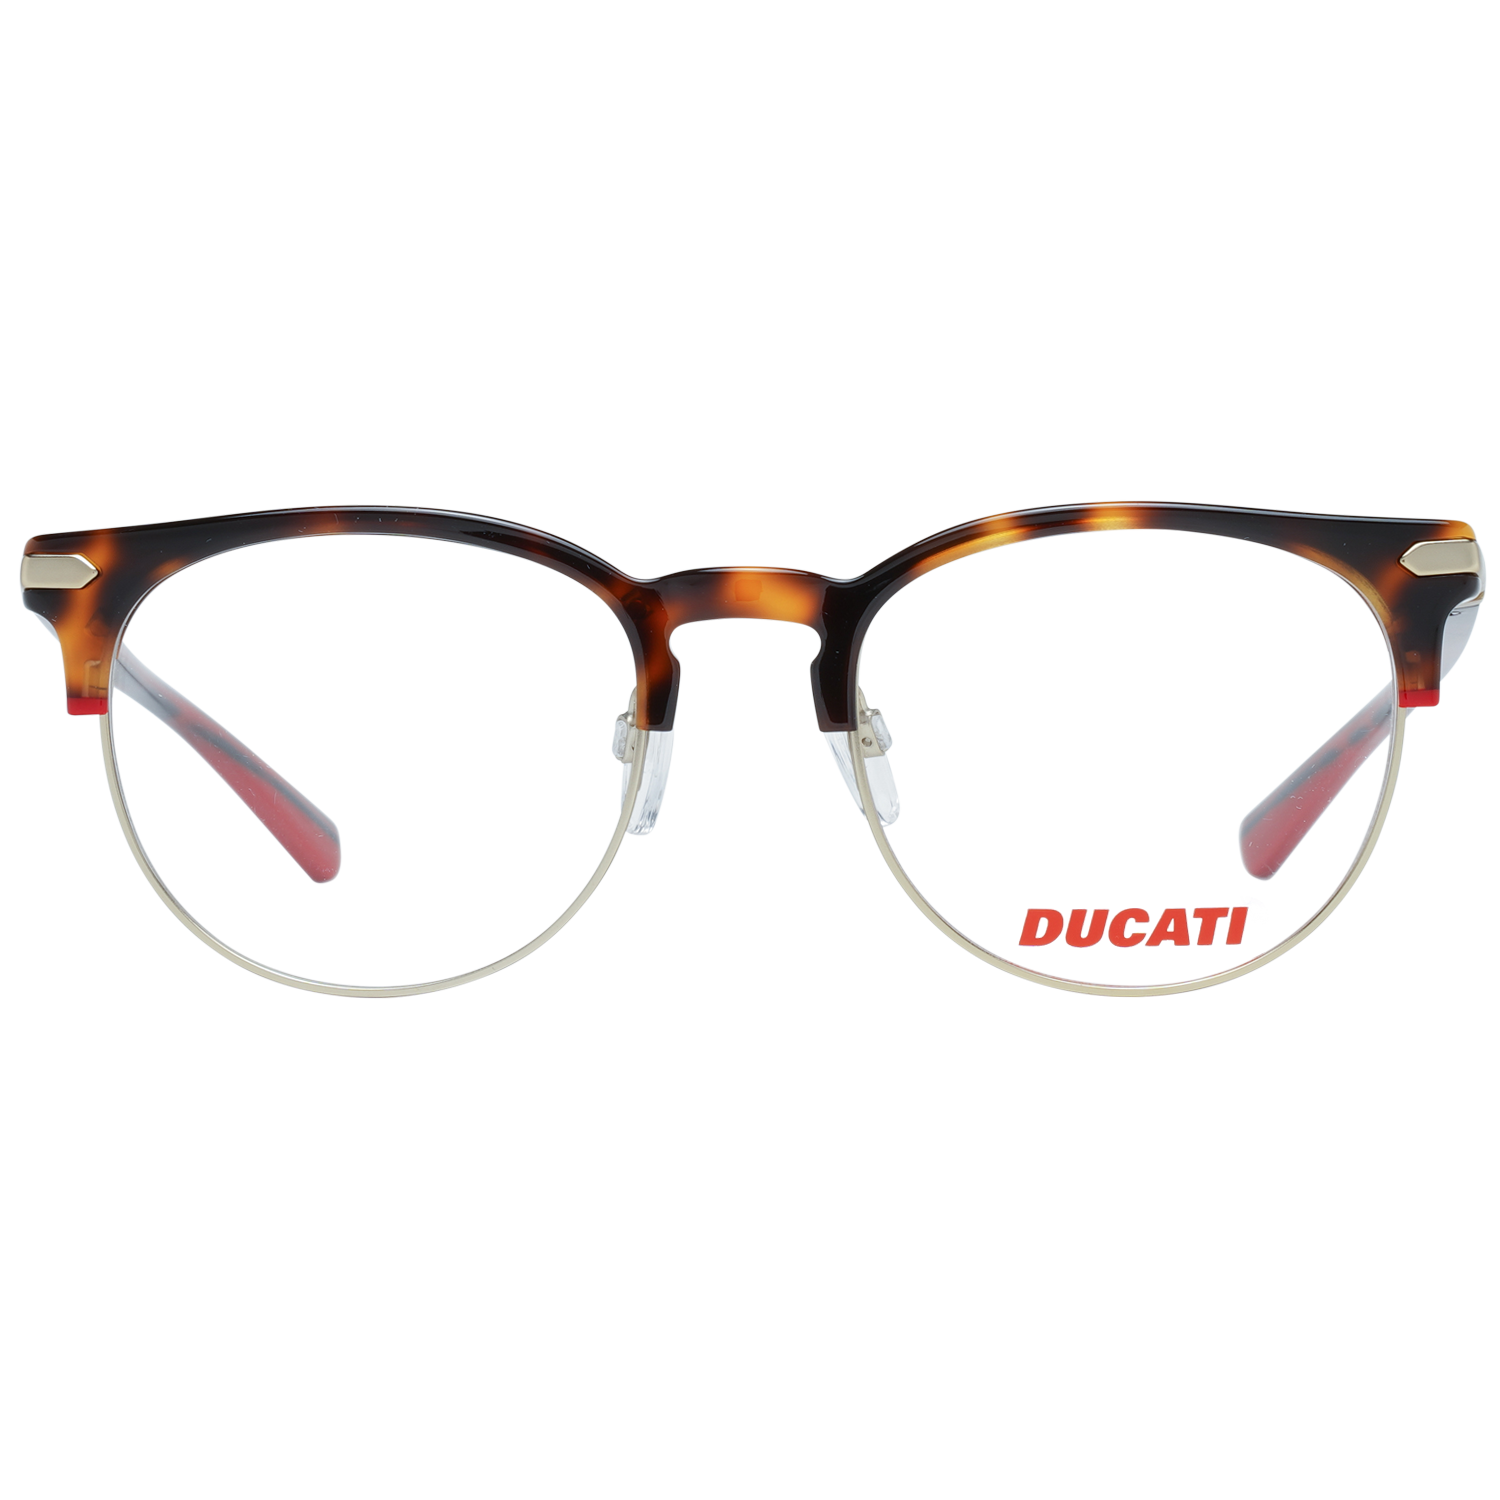 Ducati Frames Ducati Optical Frame DA1010 403 51 Eyeglasses Eyewear UK USA Australia 